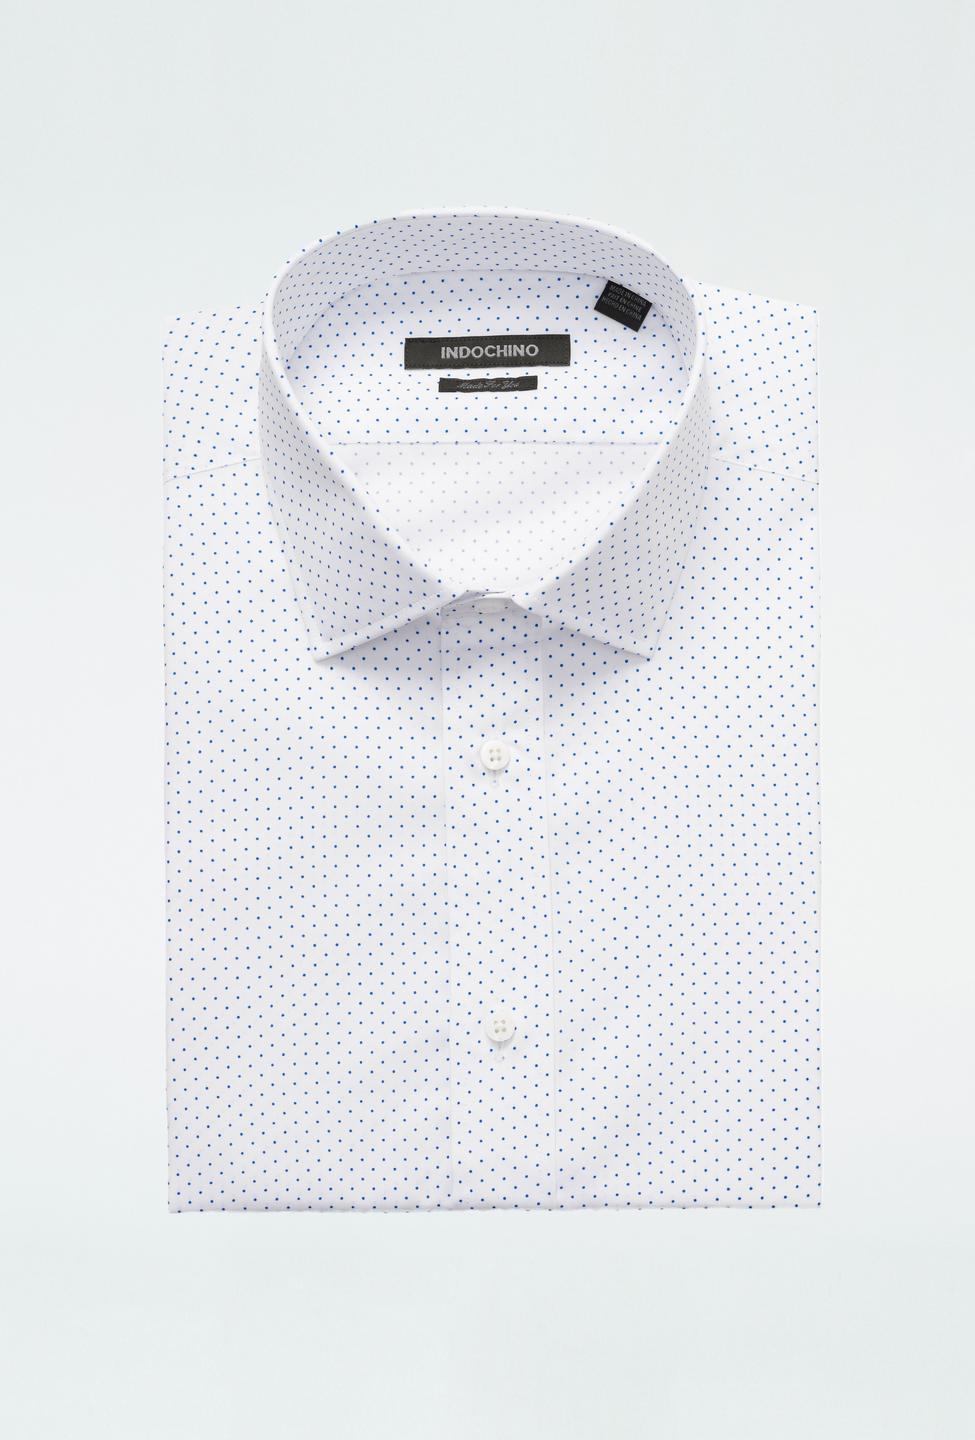 White shirt - Hayton Pattern Design from Seasonal Indochino Collection